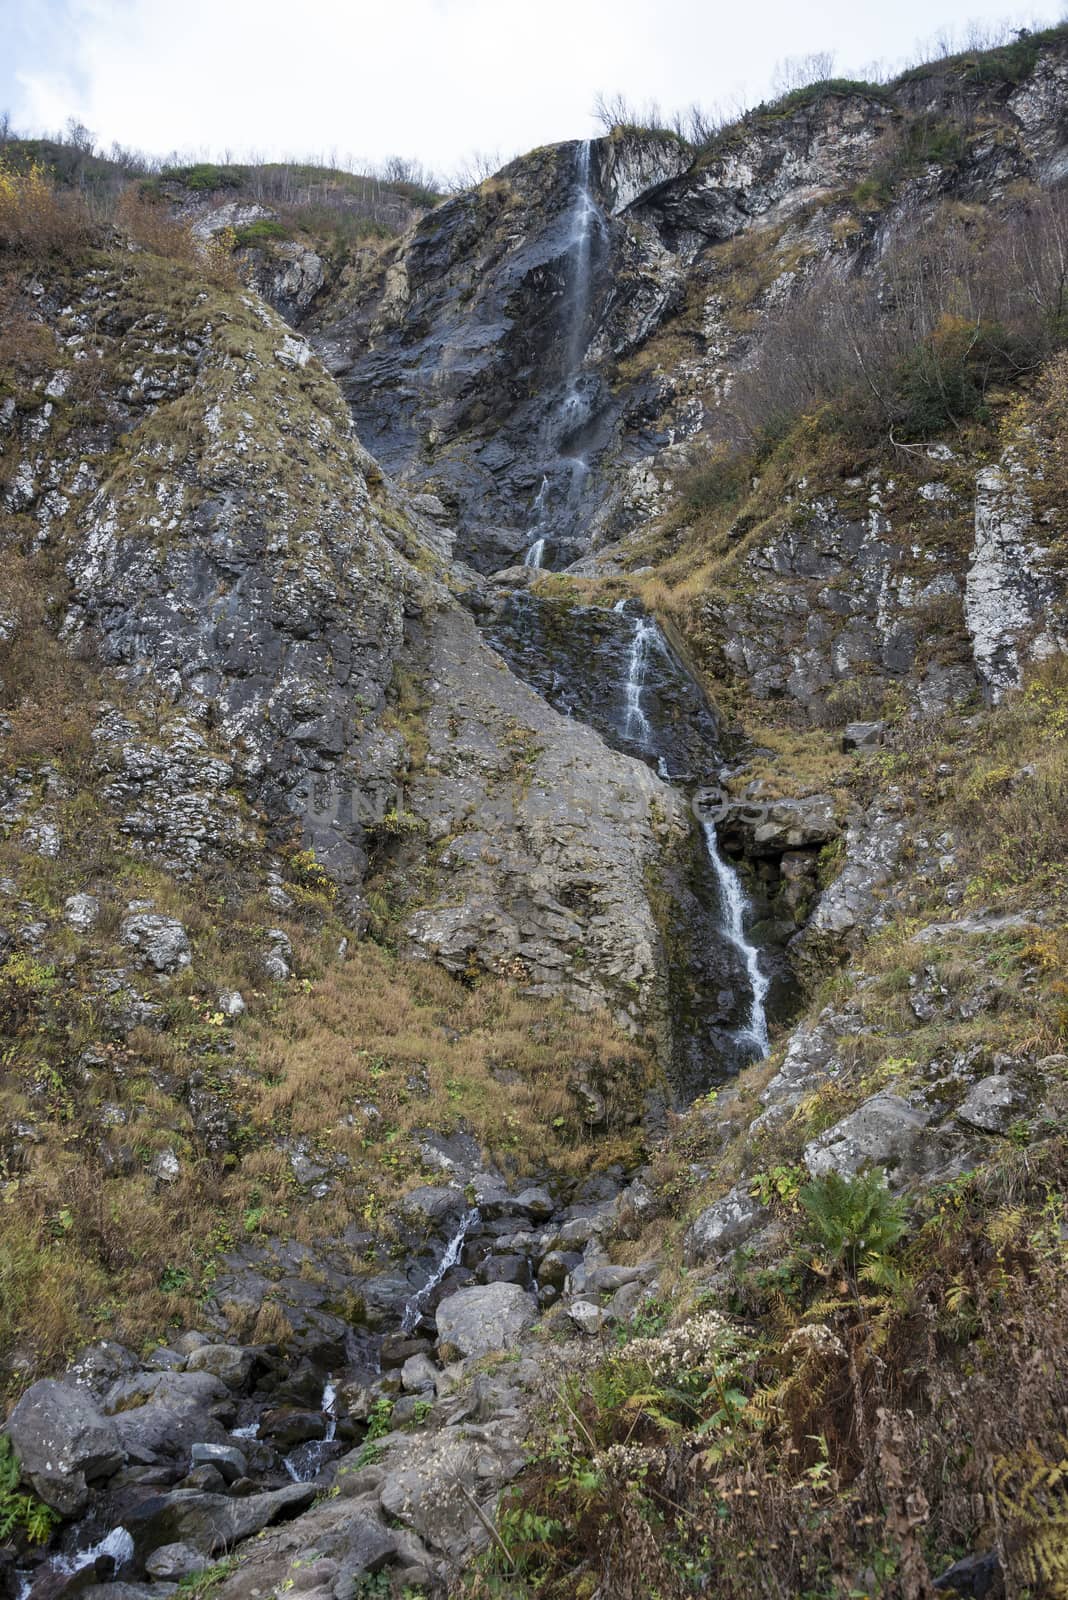 Polikarya waterfall in the Caucasus mountains near Sochi, Russia. Cloudy day 26 October 2019.